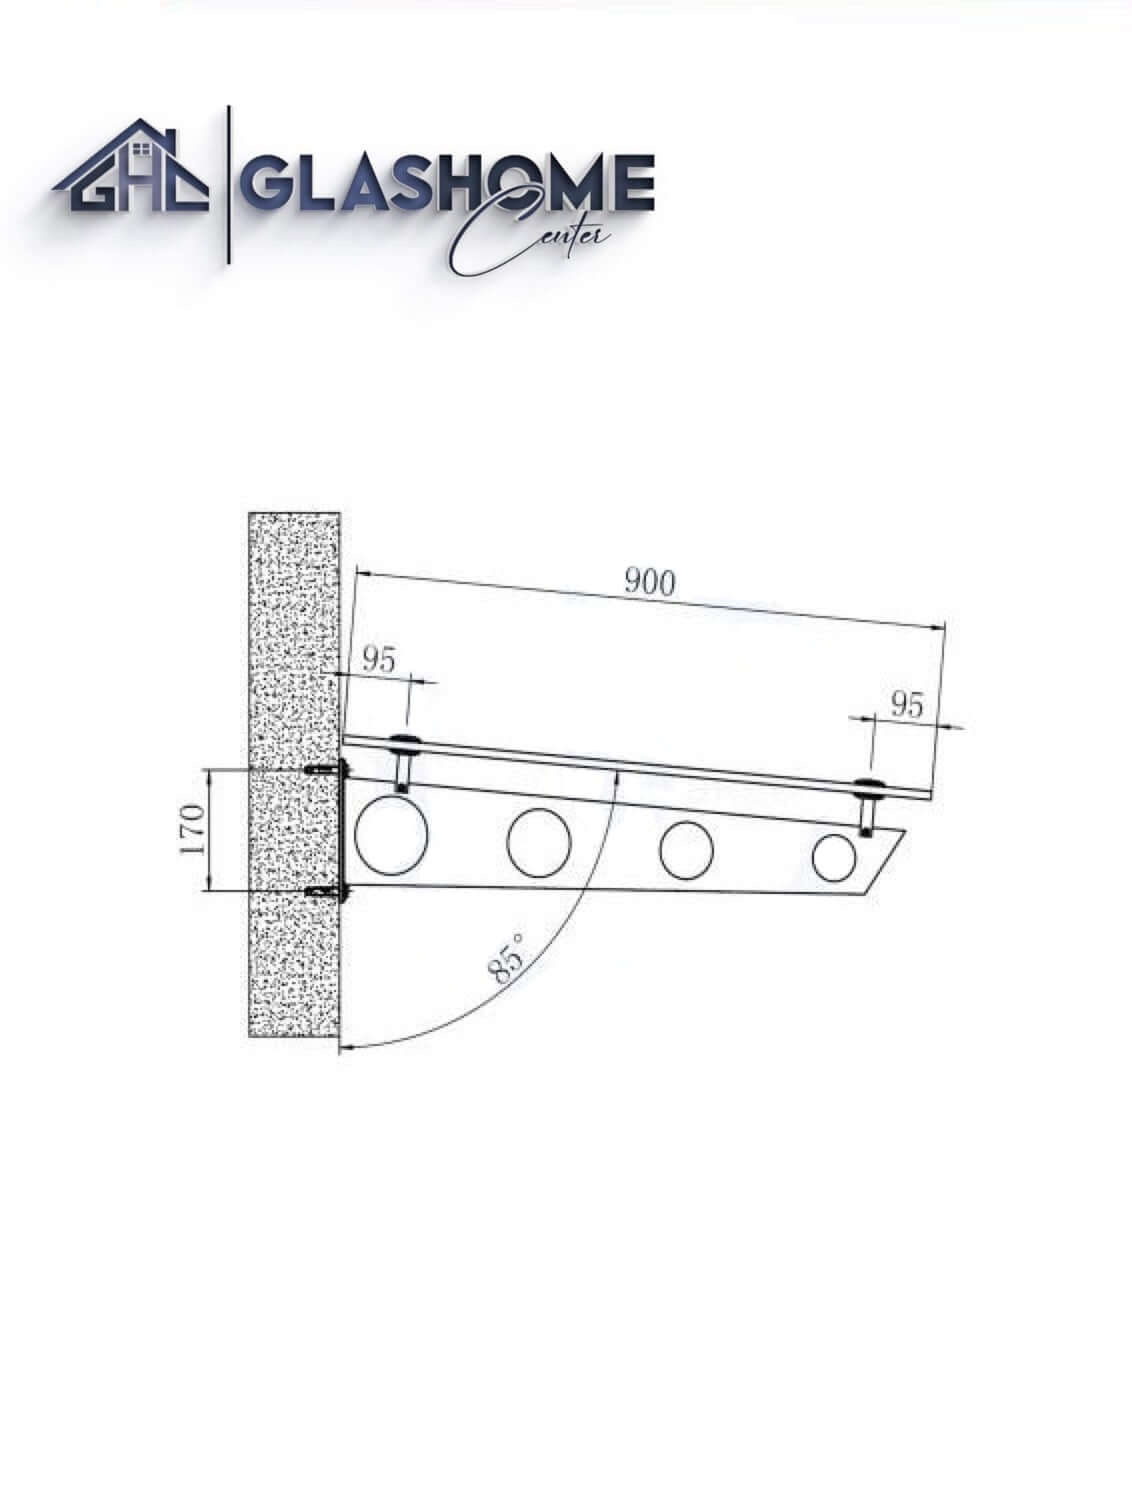 GlasHomeCenter - Glasvordach - Grauglas - 230x90cm - 13.1mm VSG - inkl. 3 Edelstahlhalterungen Variante "Stockholm"